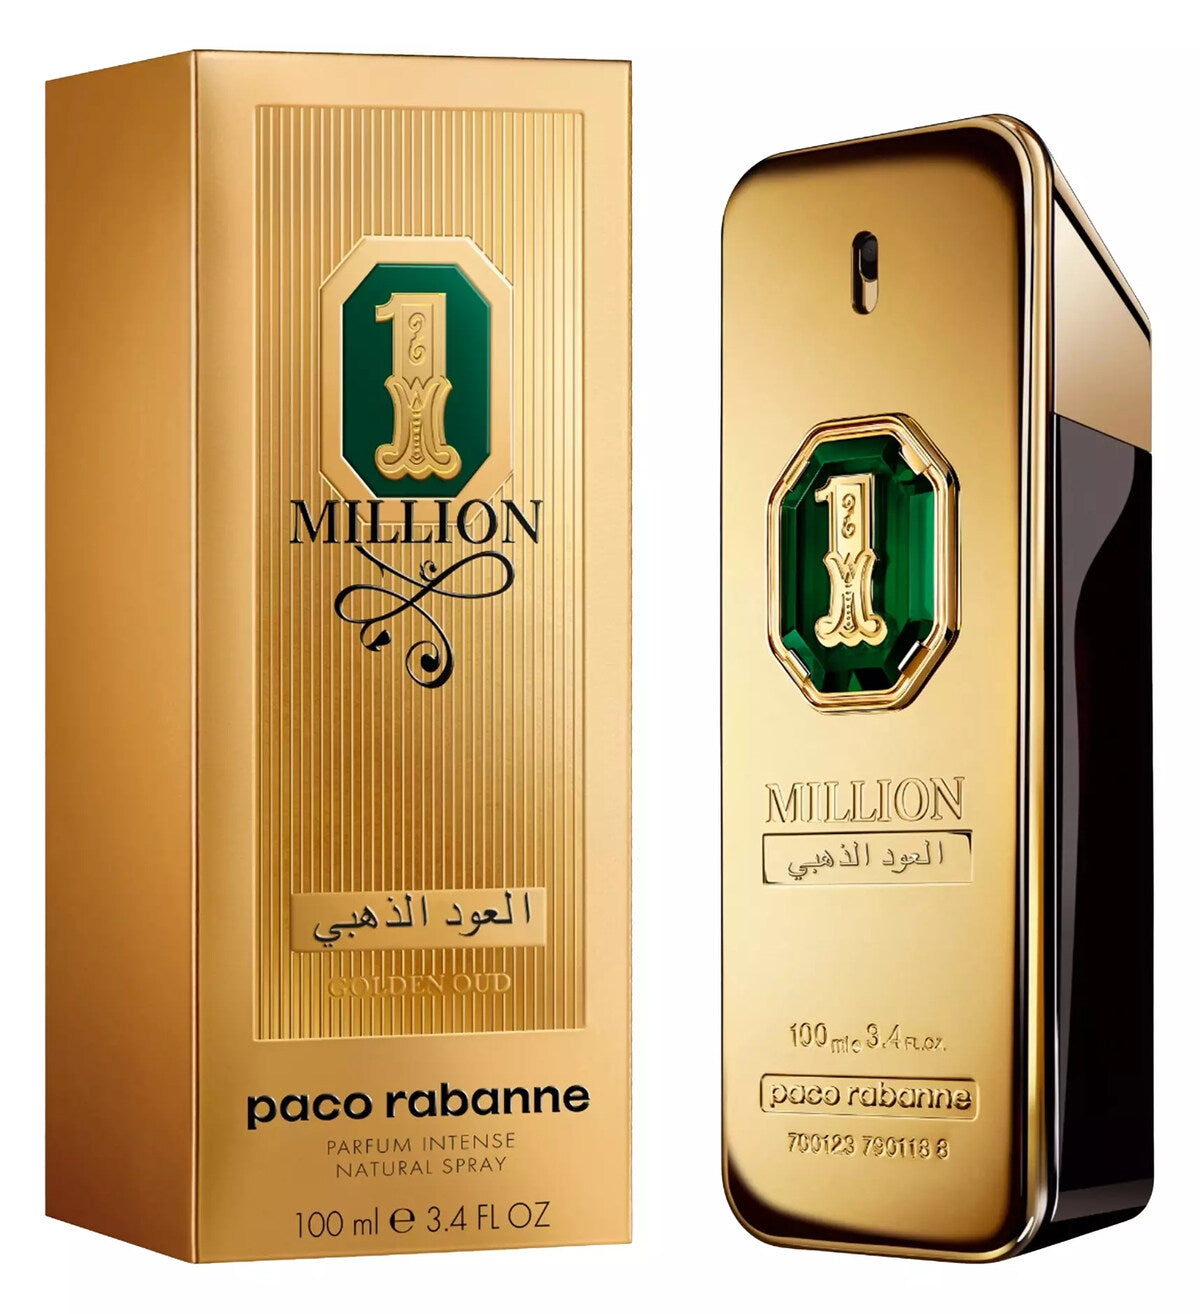 One million golden oud - Paco rabanne